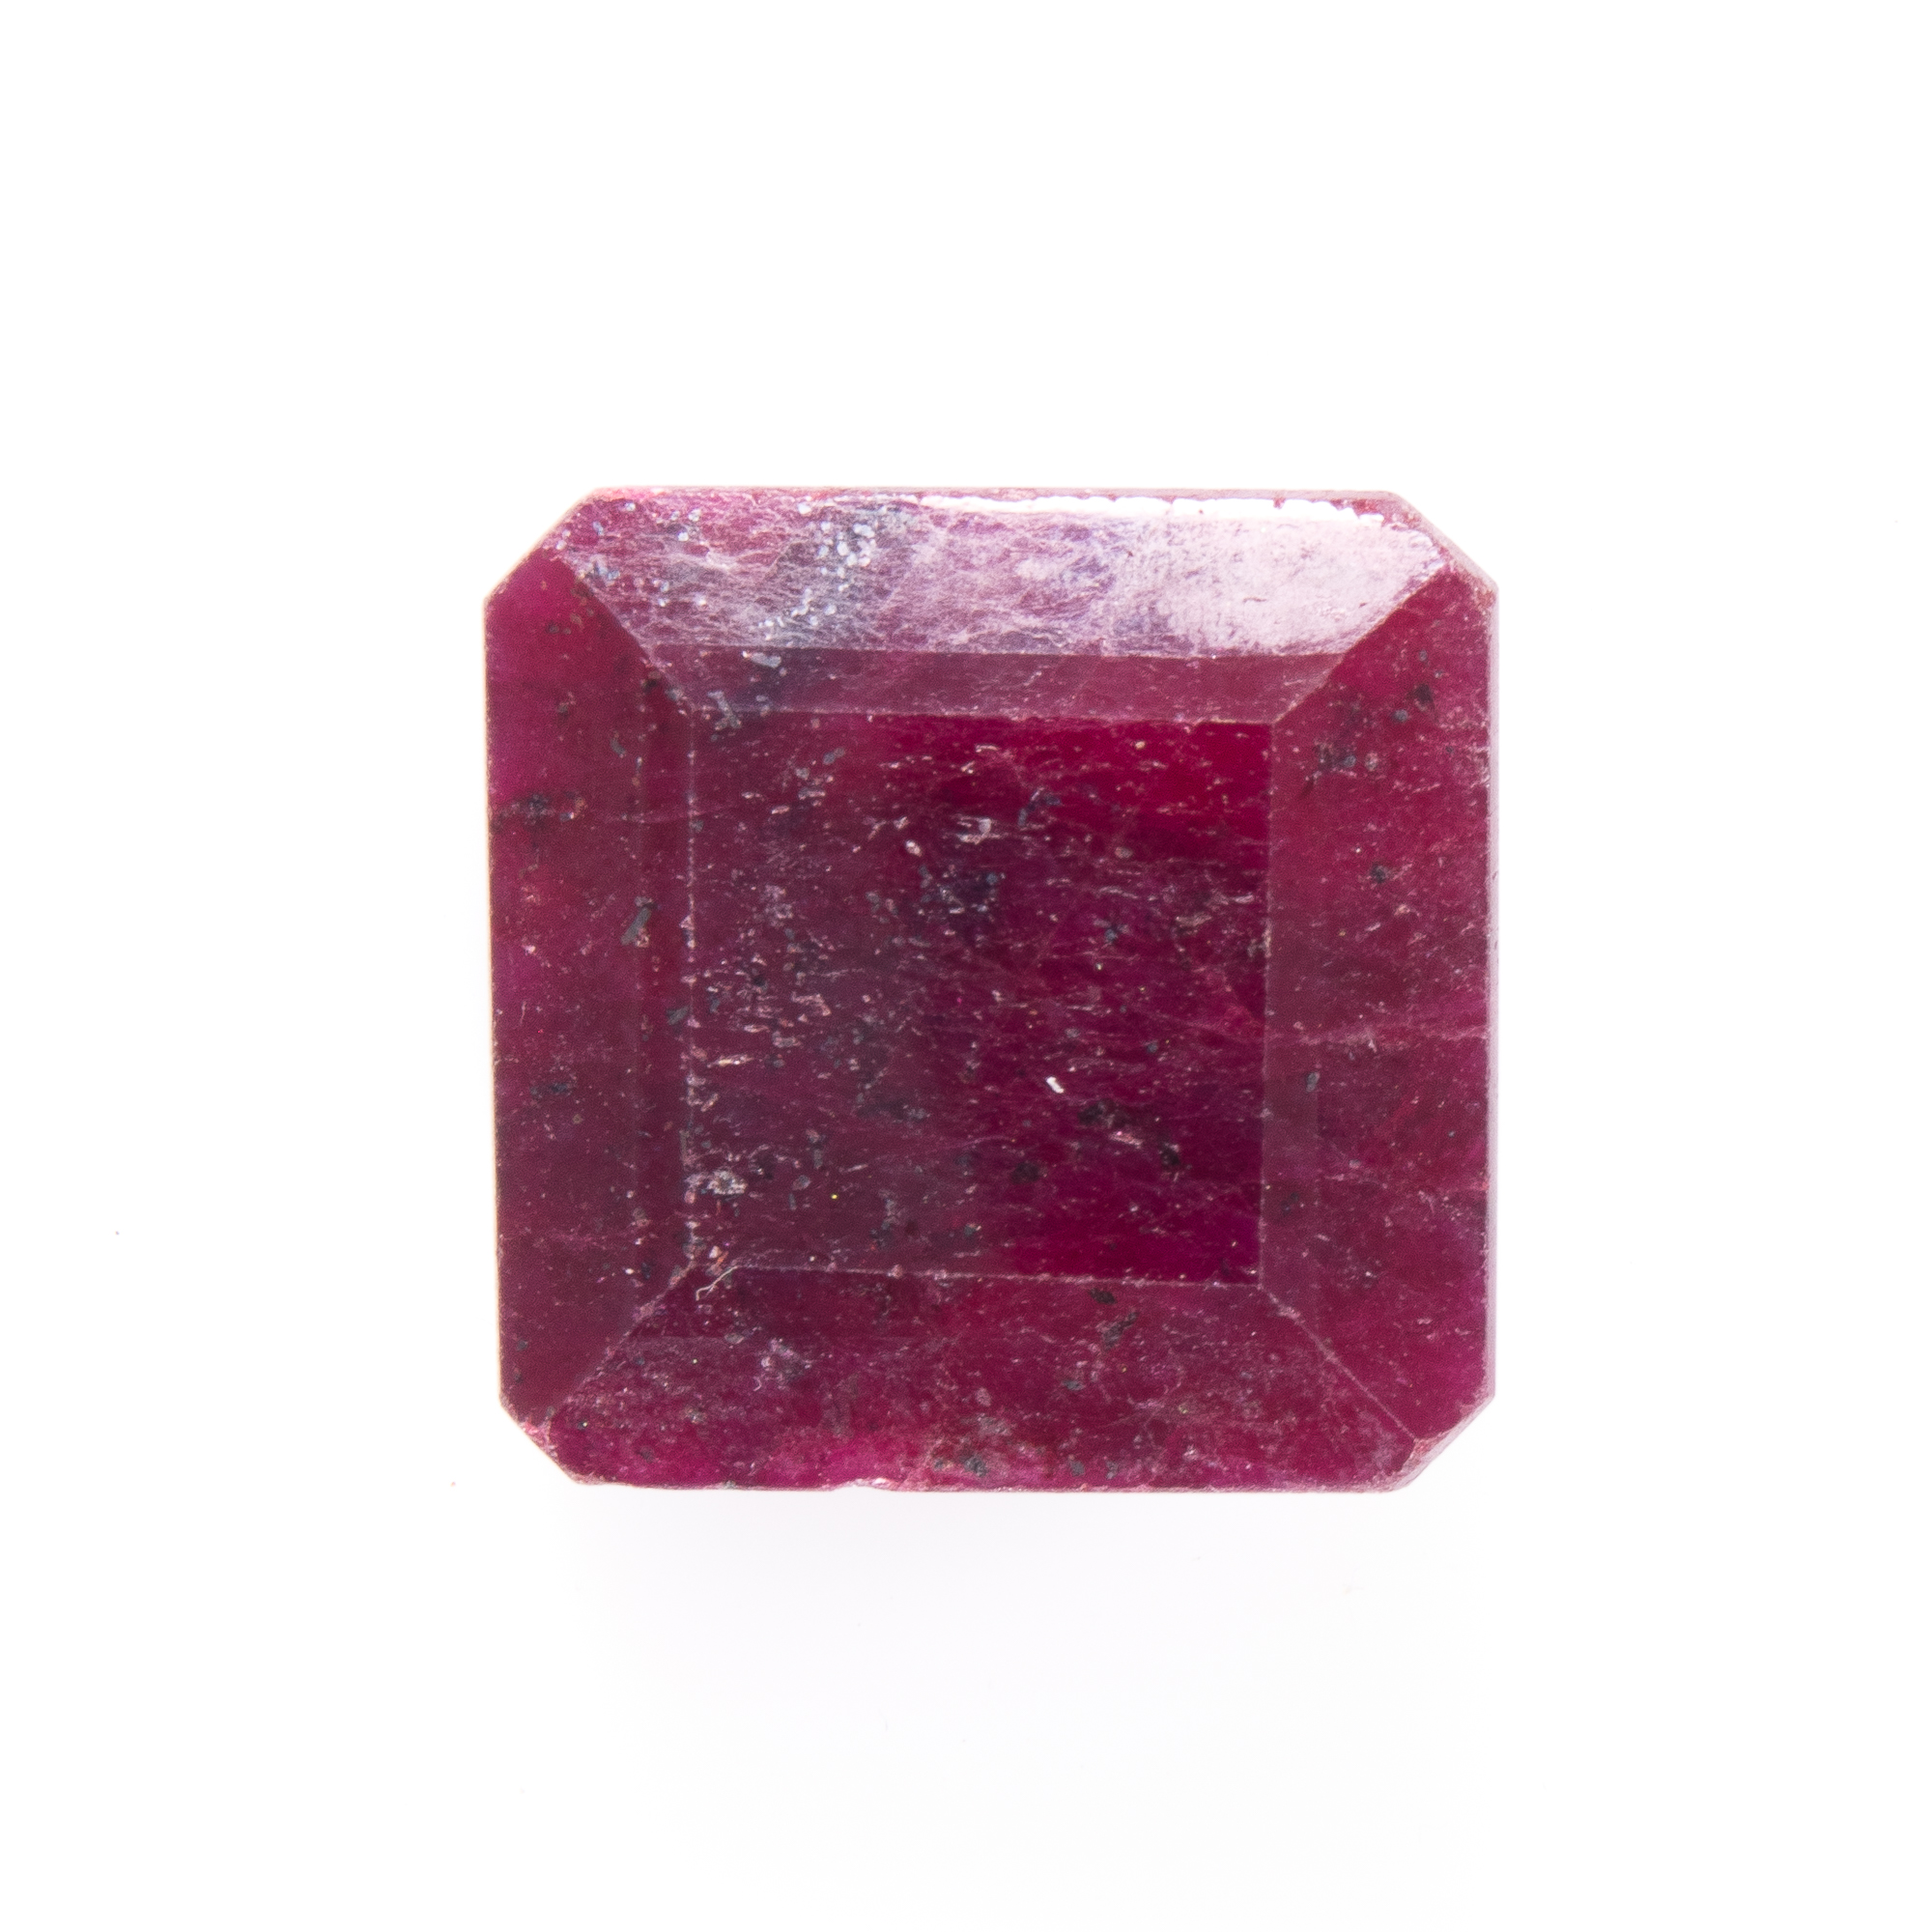 127ct Ruby Gemstone - Image 6 of 7